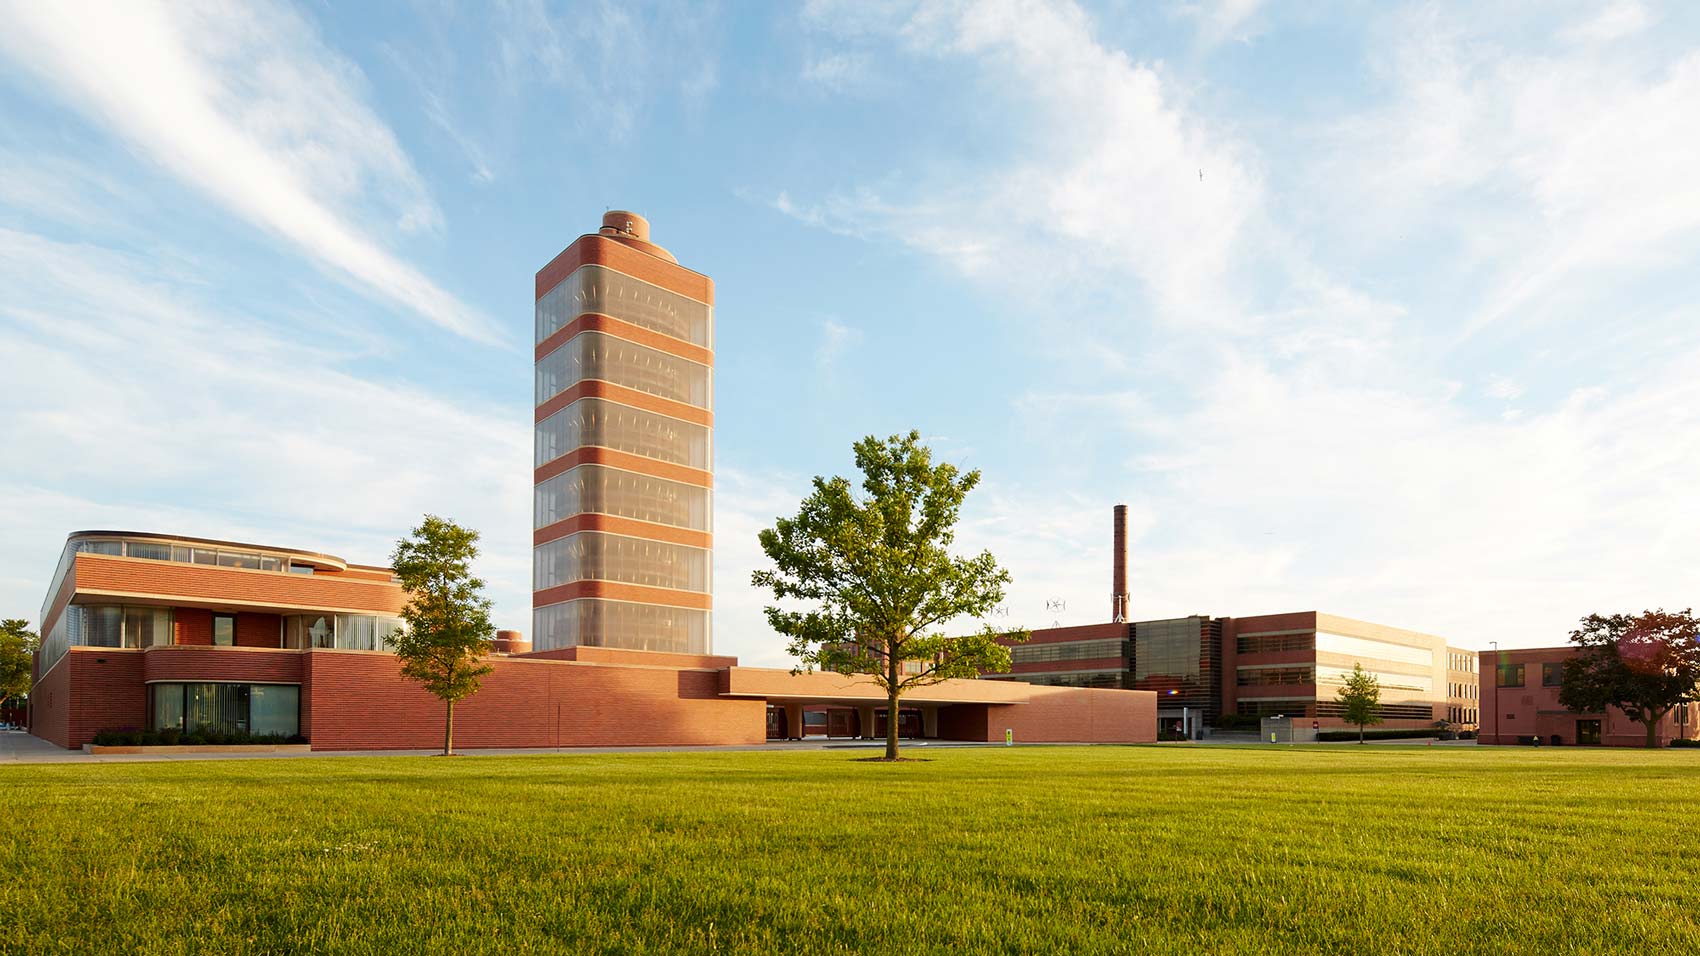 SC Johnson global headquarters campus designed by Frank Lloyd Wright